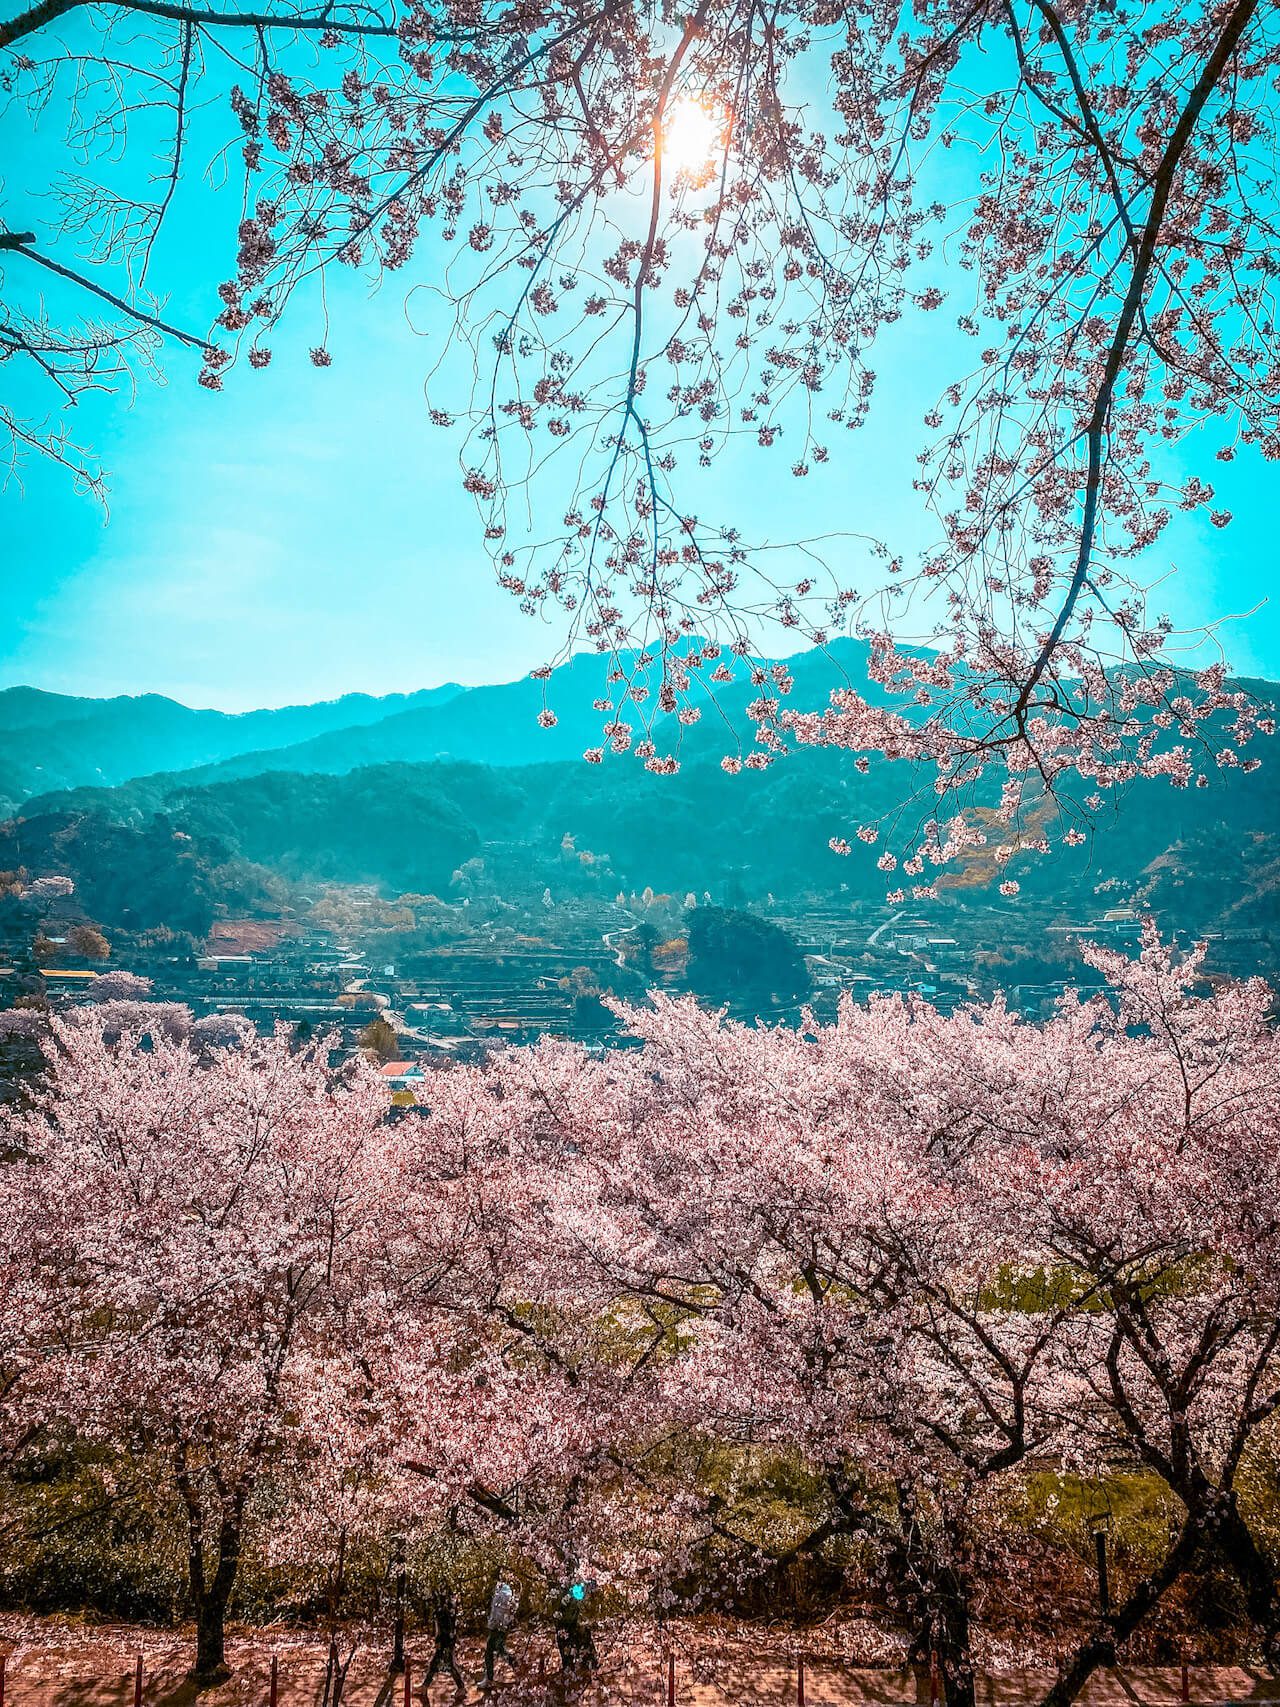 hwagae simri cherry blossom road in hadong, south korea